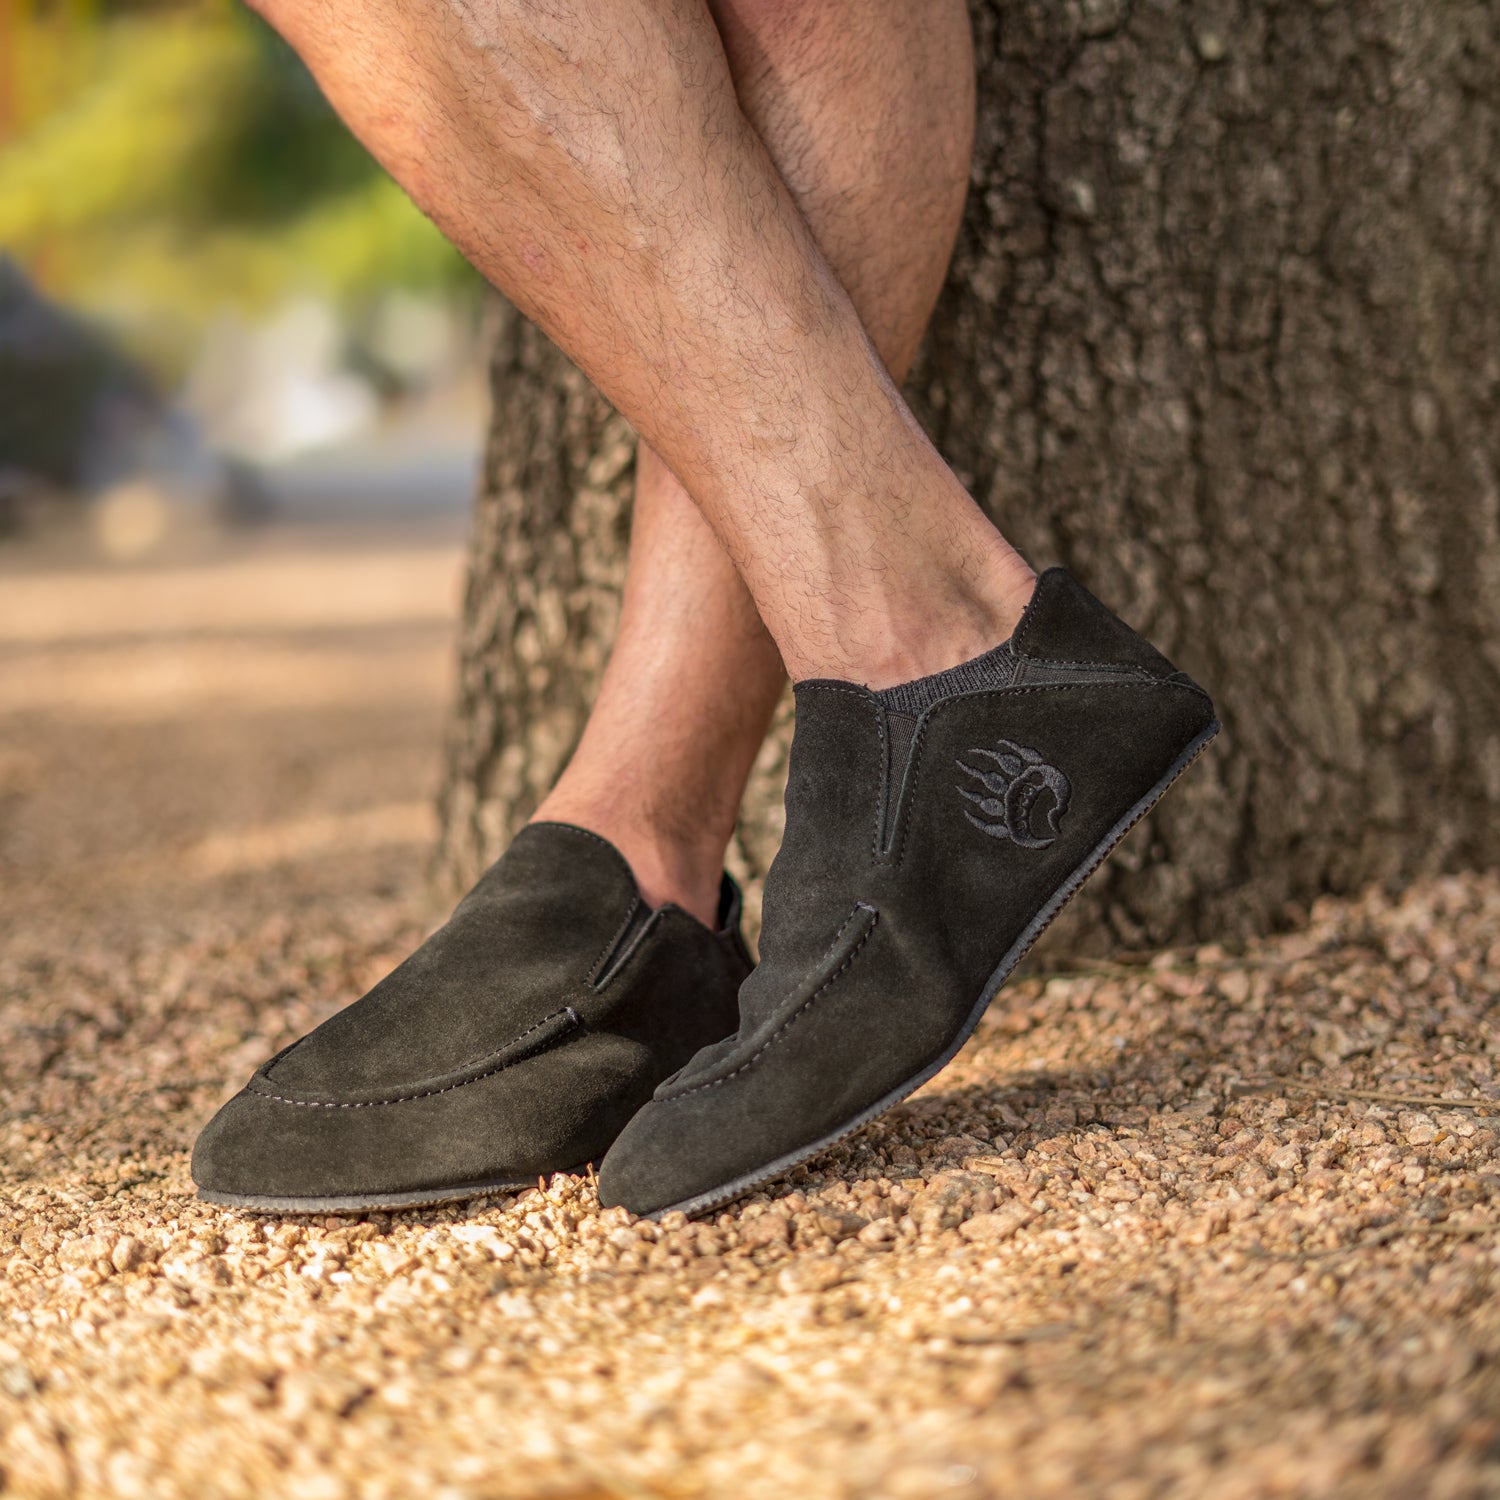 BAREFOOT OSLO Marrón oscuro, suelas Vibram SUPERNEWFLEX​ de 6mm de grosor,  zapatos Barefoot para mujer y hombre, calzado Barefoot, zapato veganos,  eco-friendly, barefoot.: 84,00 € - BIOWORLD SHOES